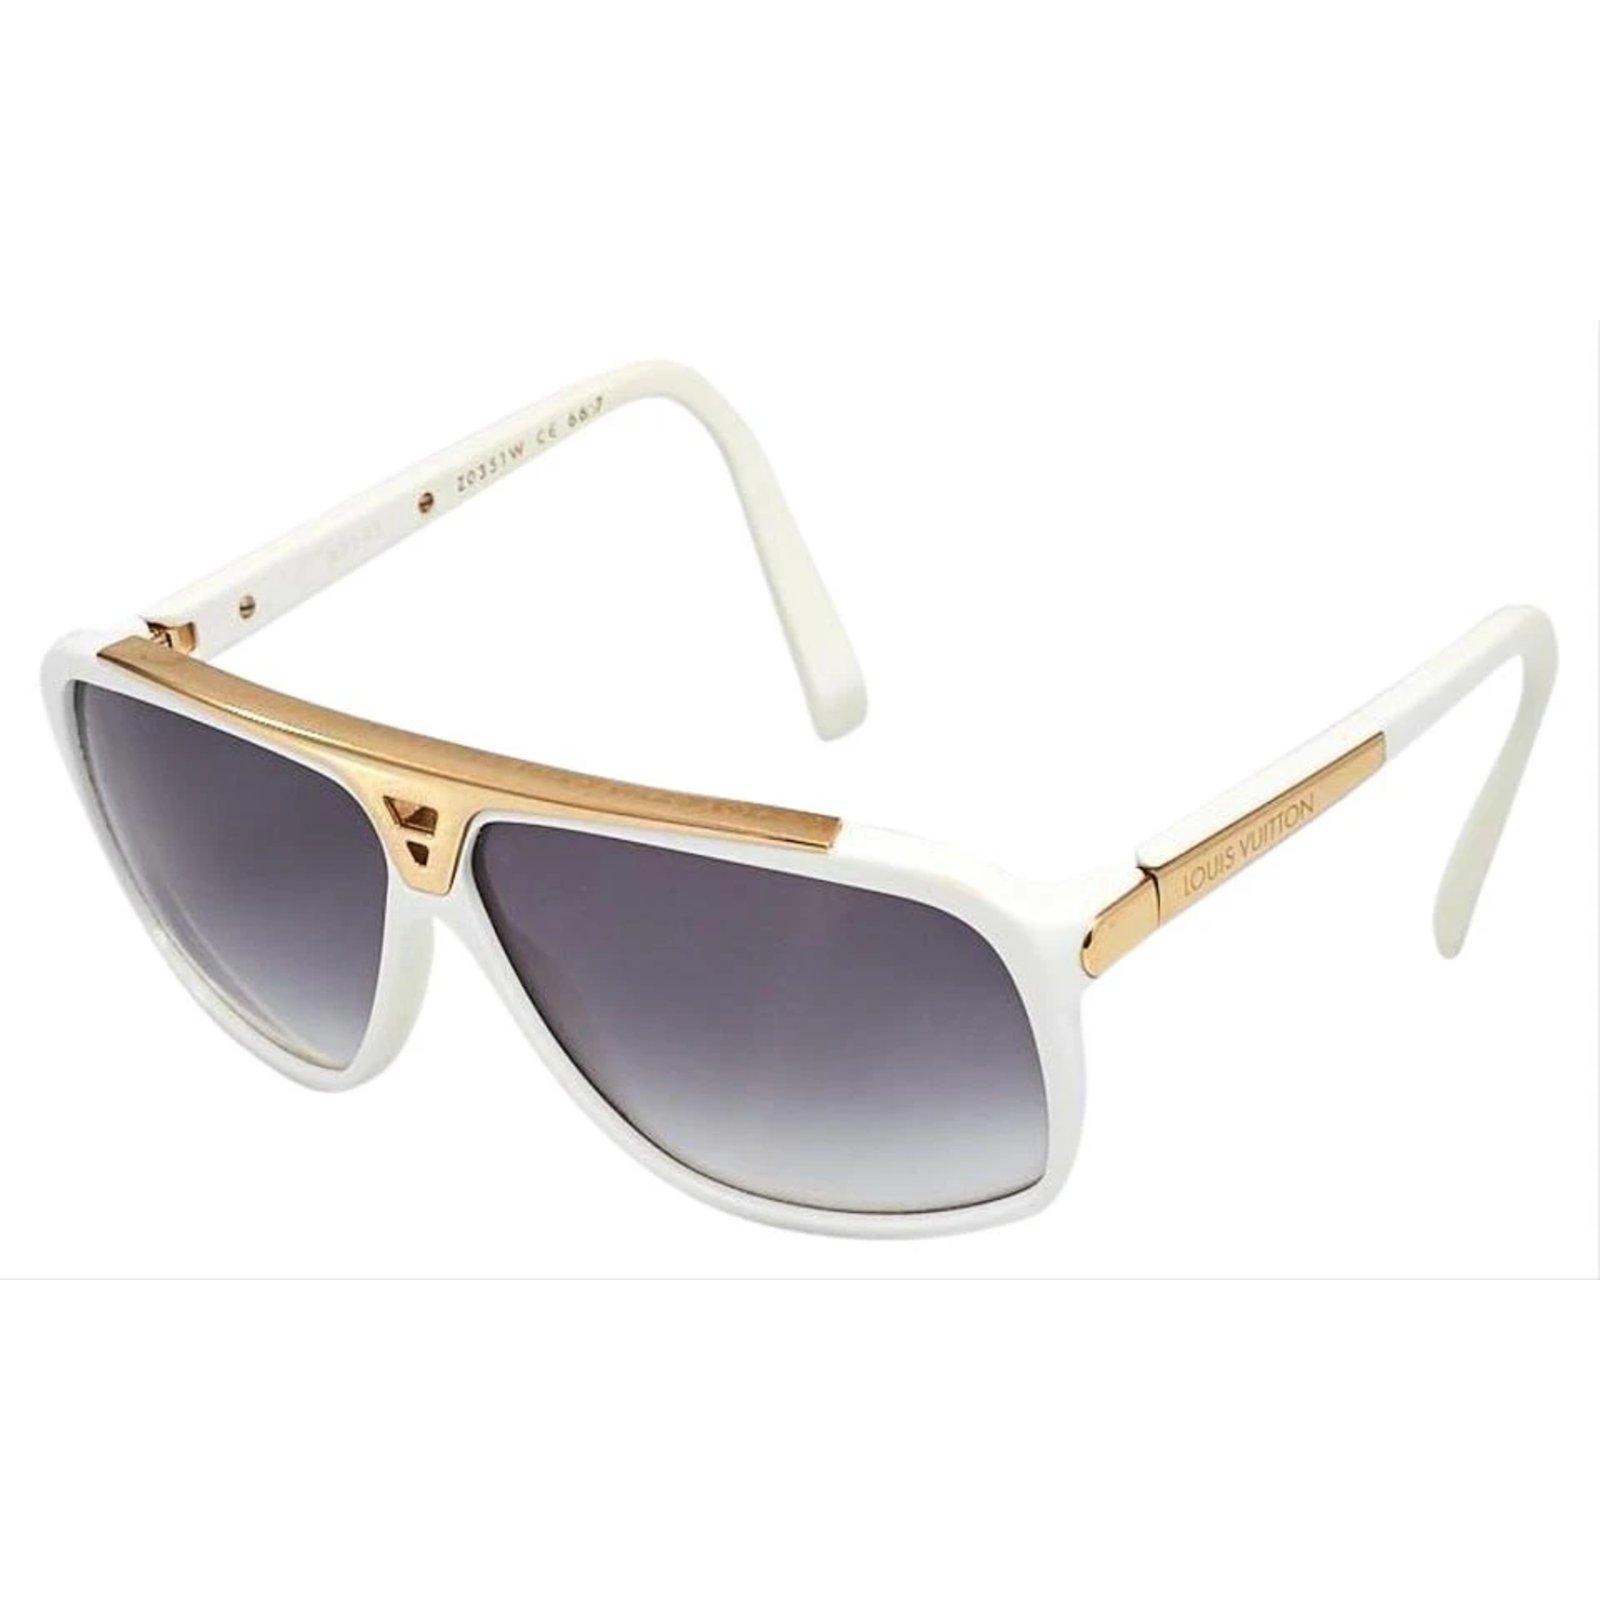 Gafas de sol Louis Vuitton blancas